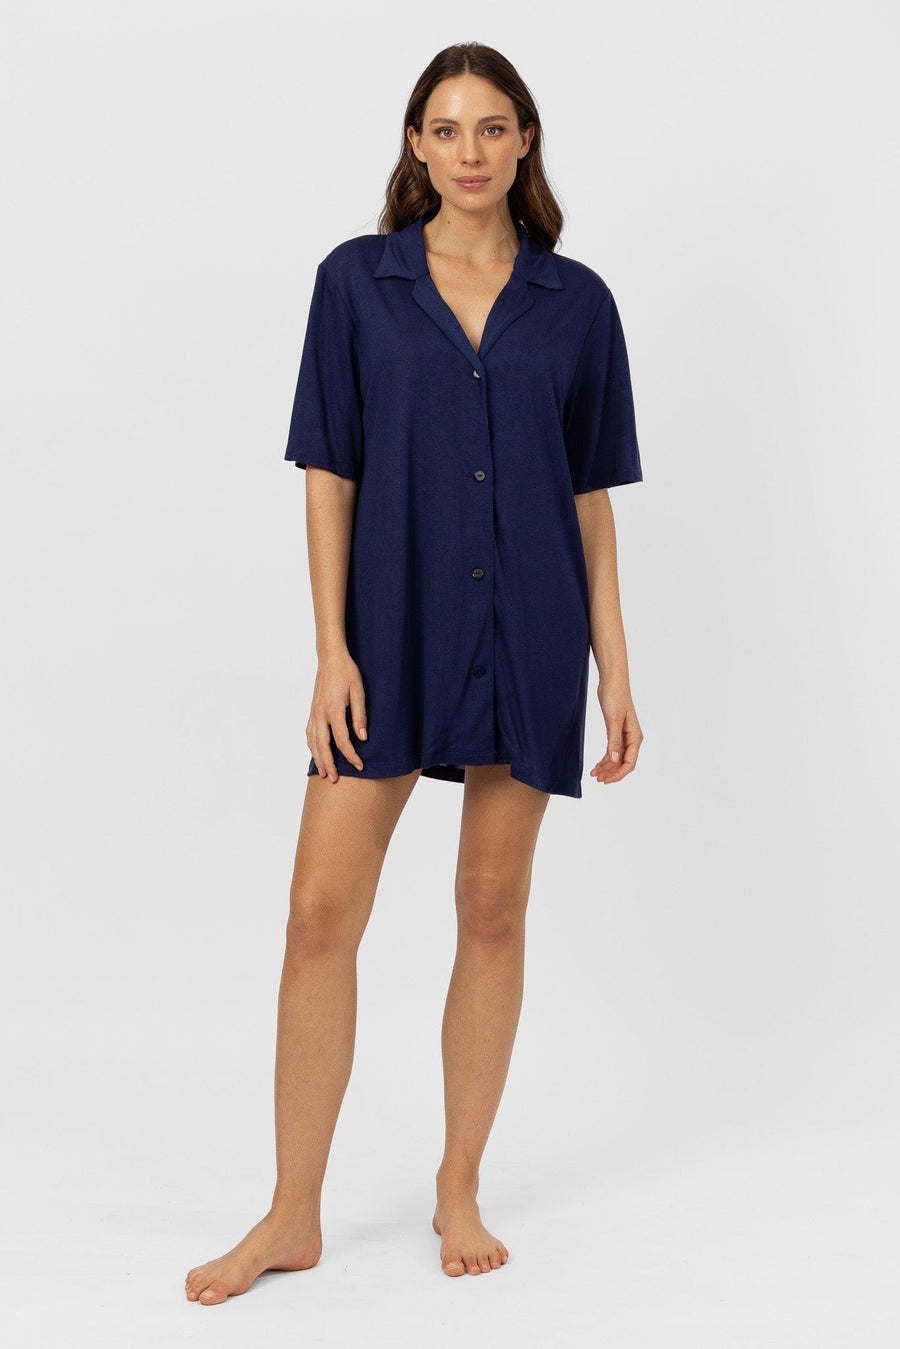 Lively Short Sleeve Dress | Navy Nightgowns Australia Online | Reverie the Label  DRESSES Lively Short Sleeve Dress